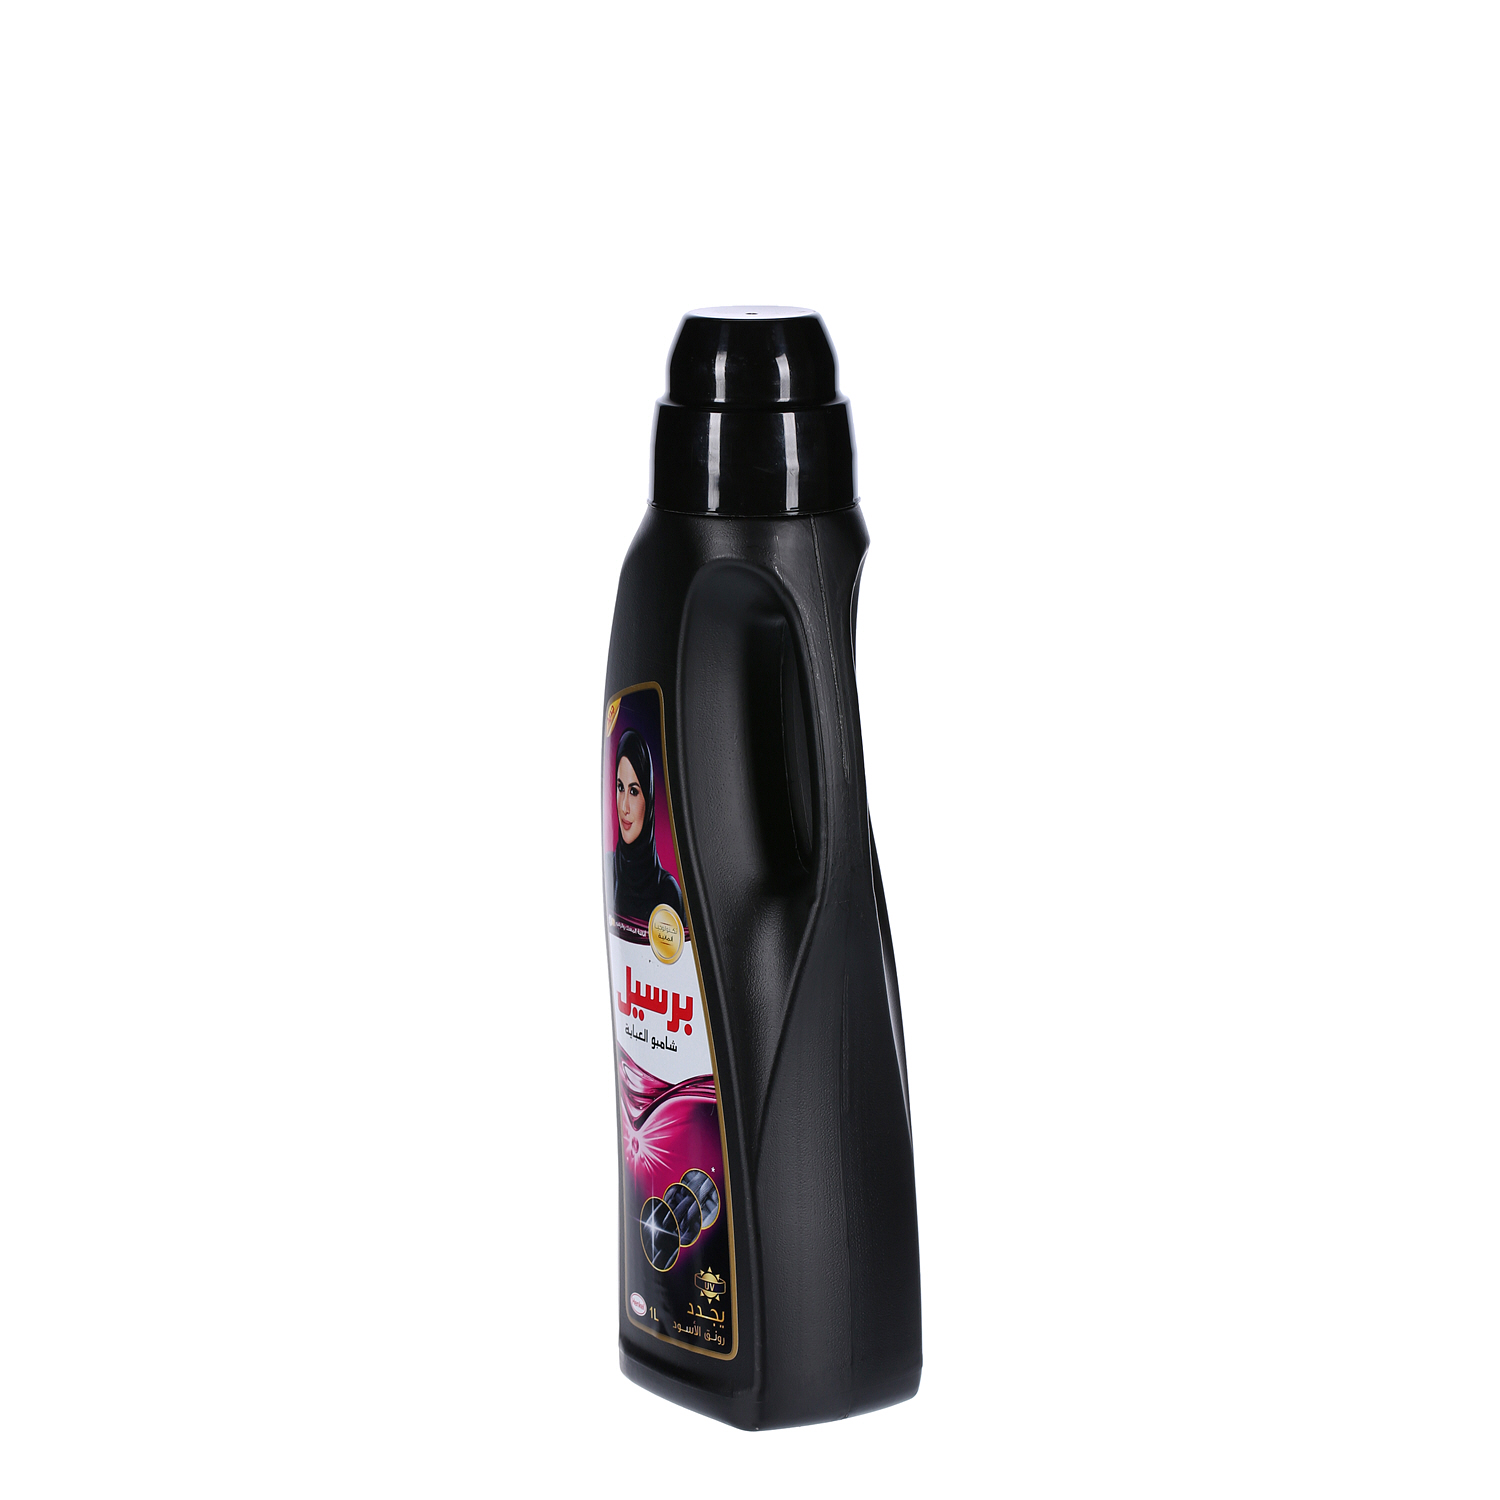 Persil Abaya Shampoo Liquid Detergent Anaqa Musk And Flower 1 L